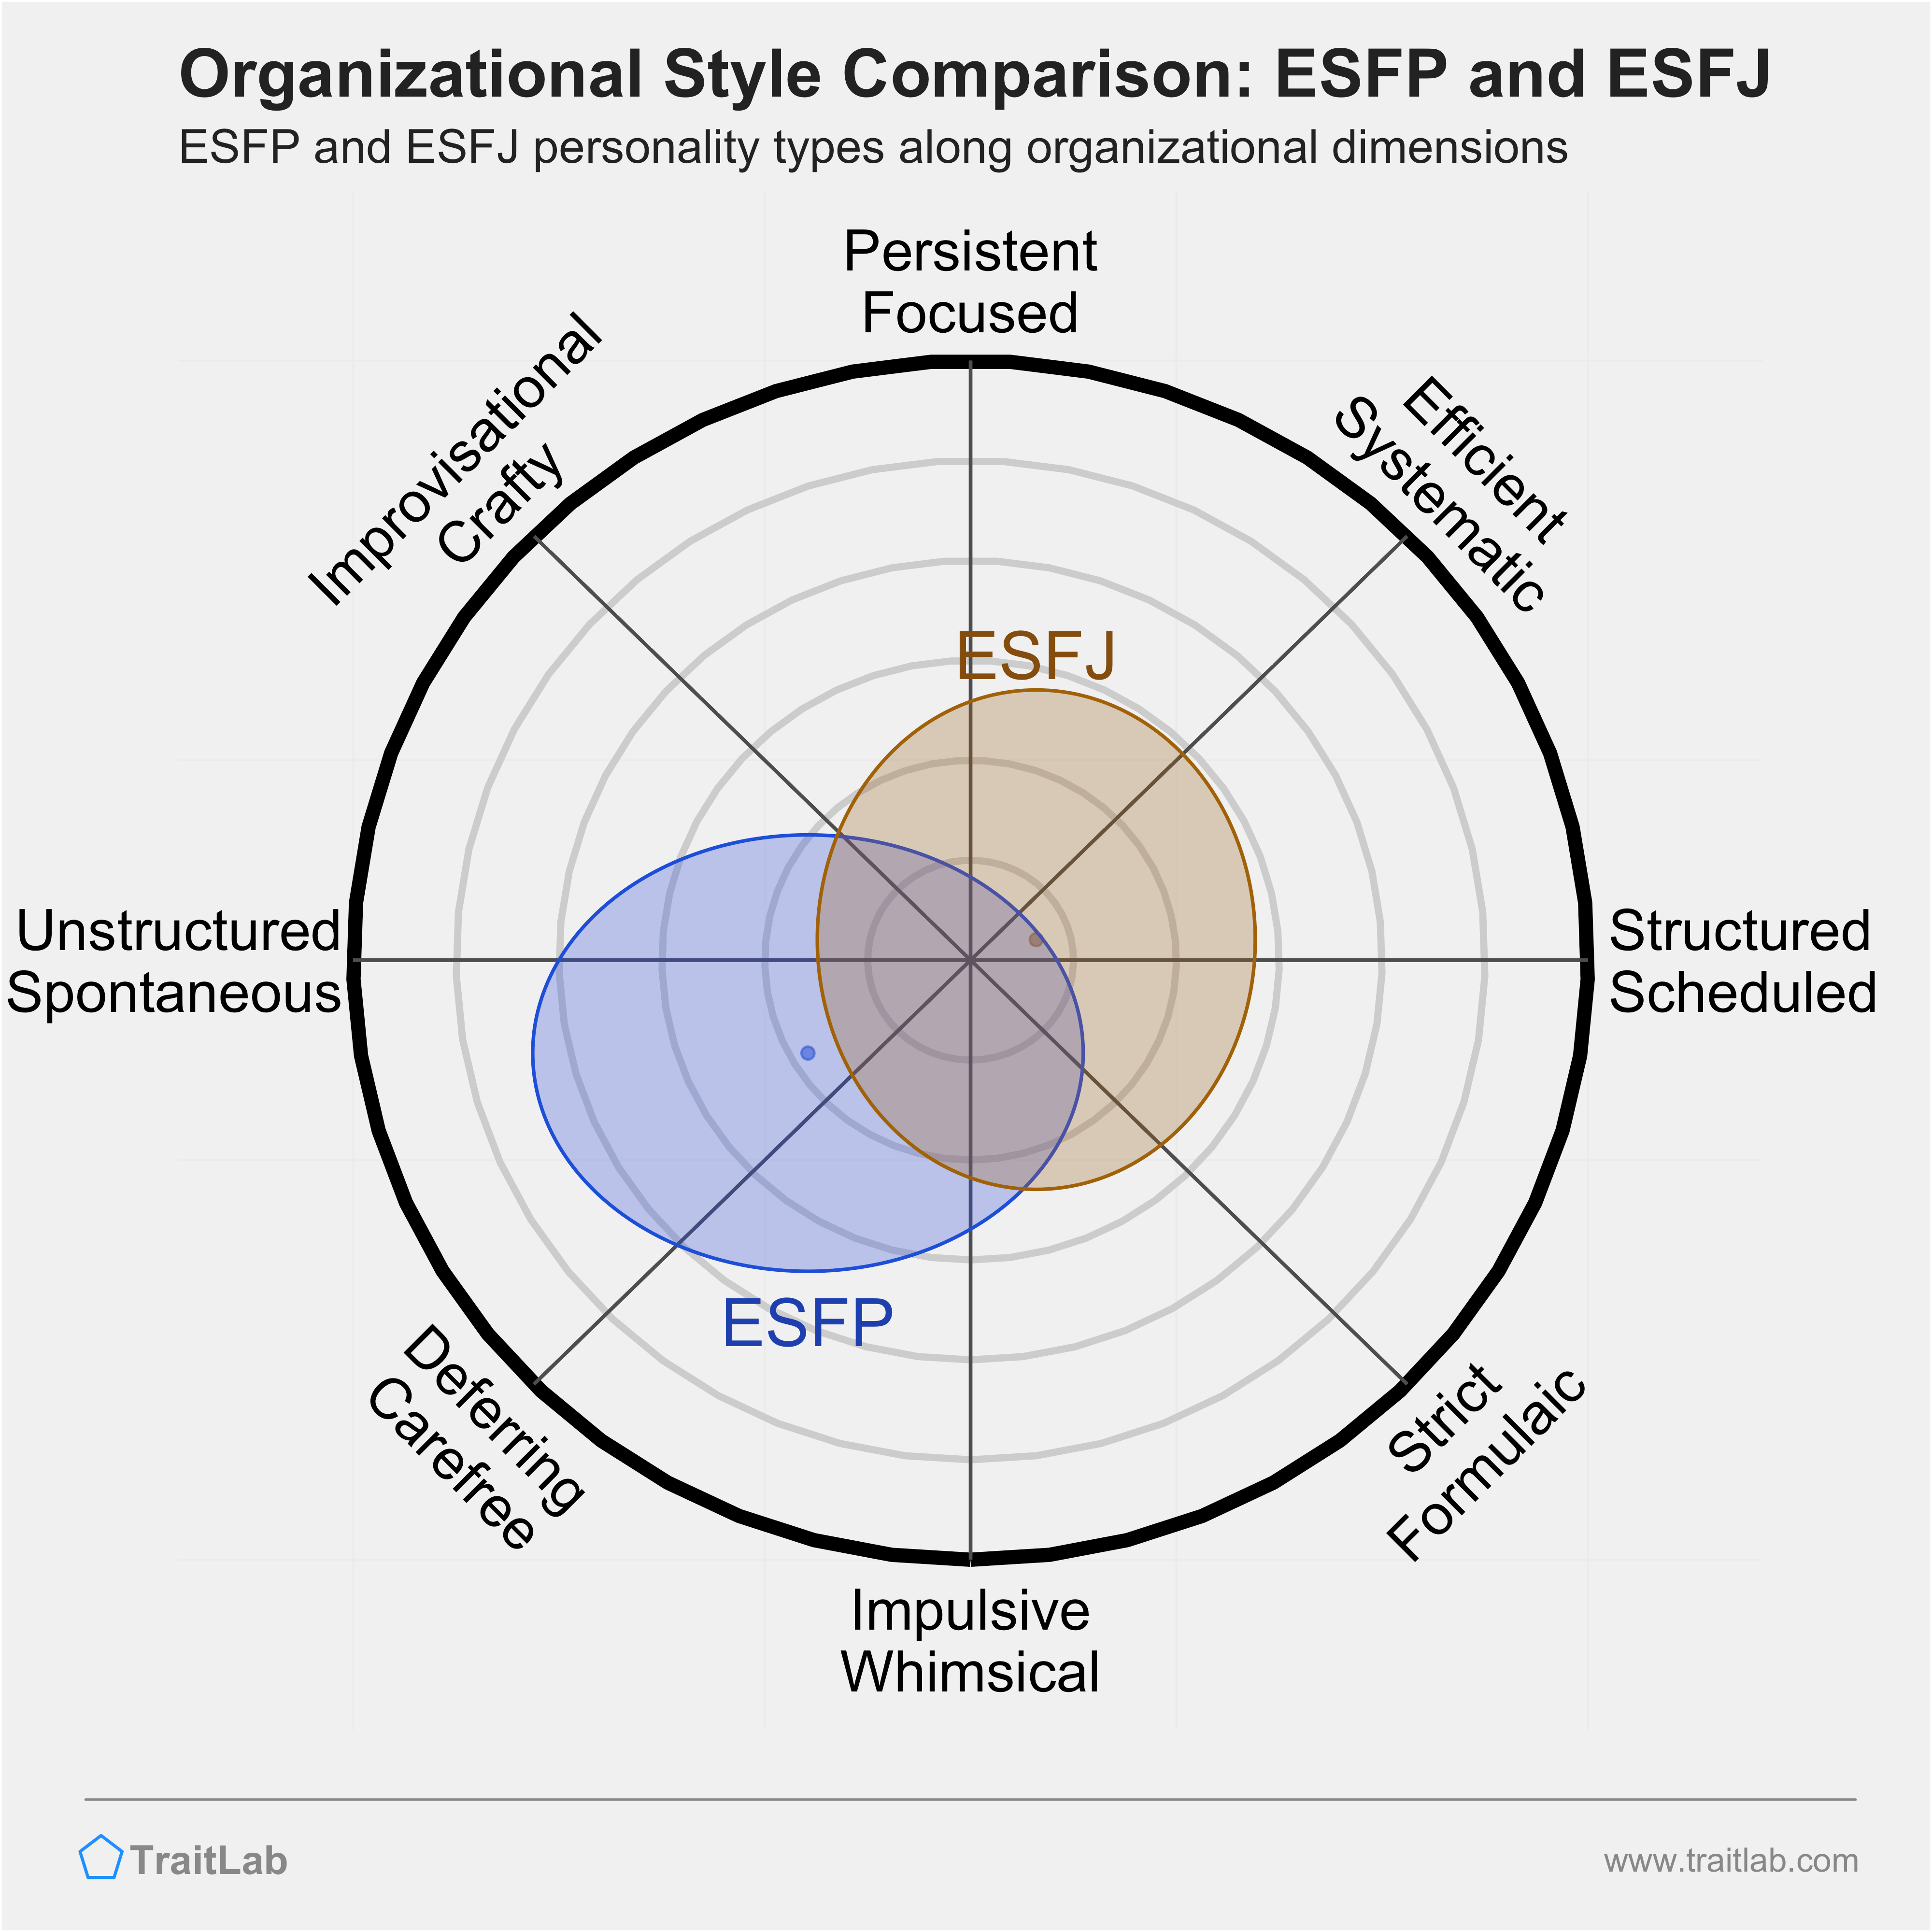 ESFP and ESFJ comparison across organizational dimensions